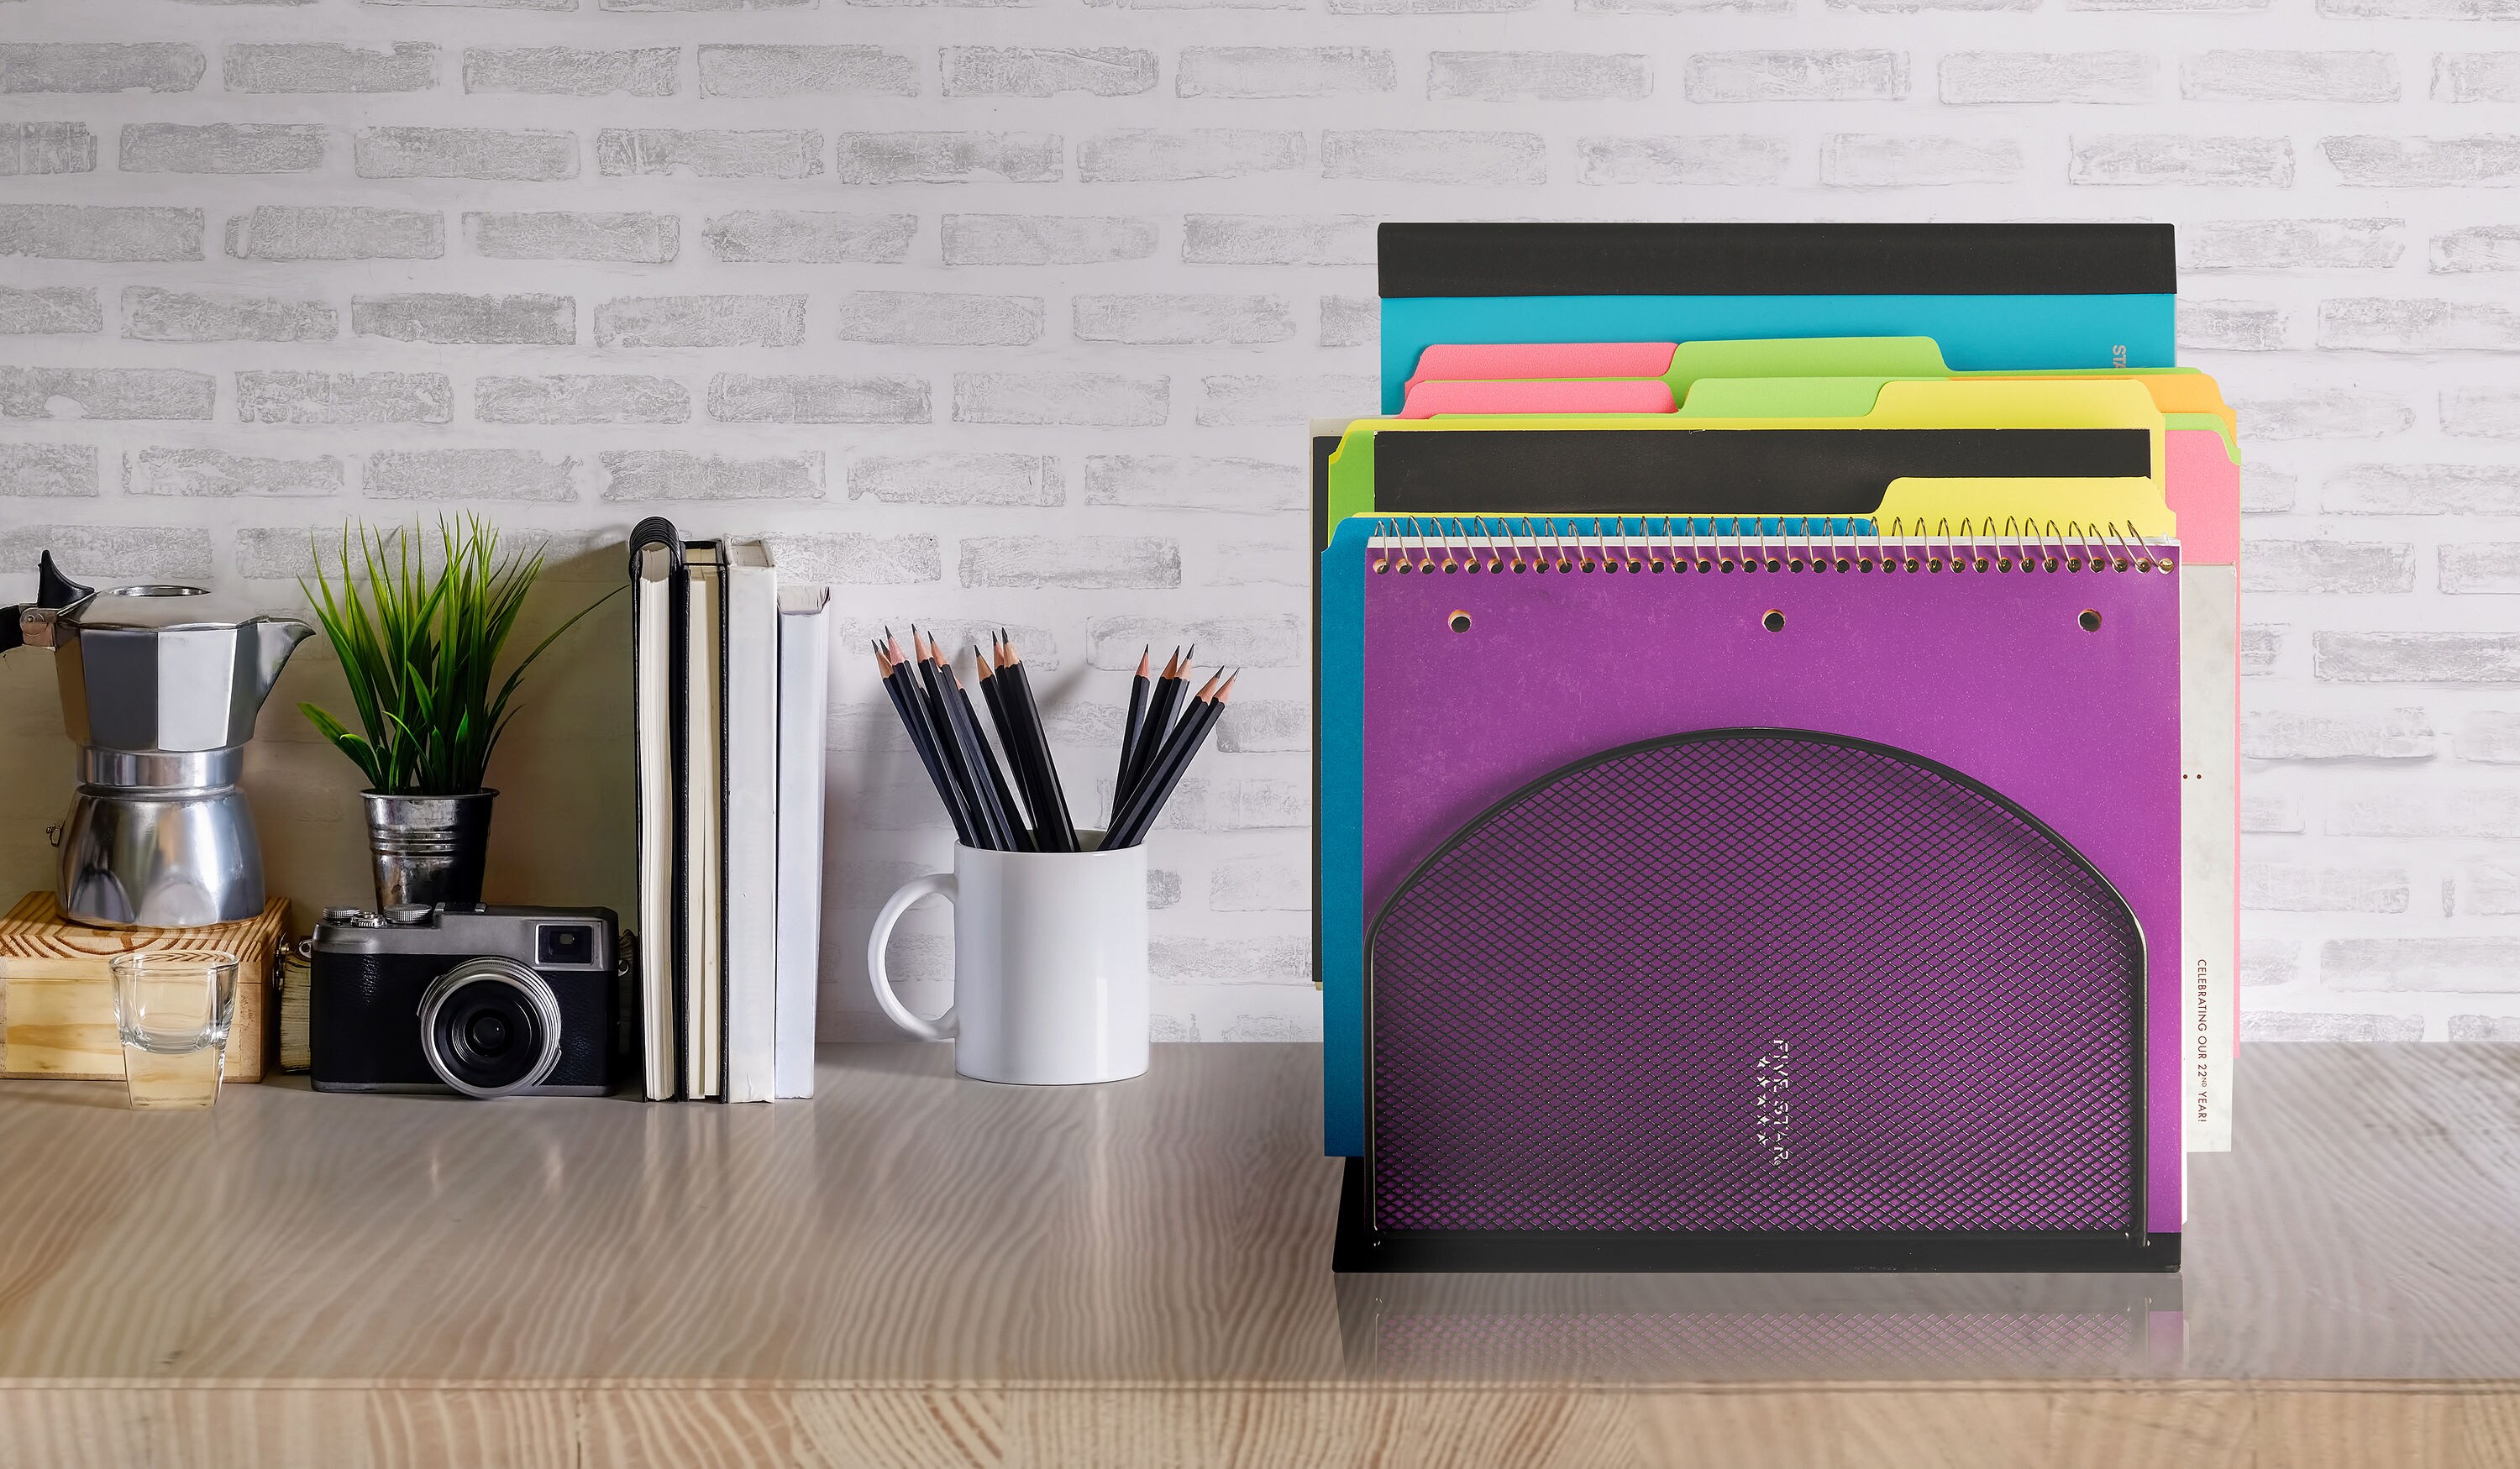 AdirOffice Purple 6 Compartment Desktop File Classroom Literature Organizer (2-Pack)